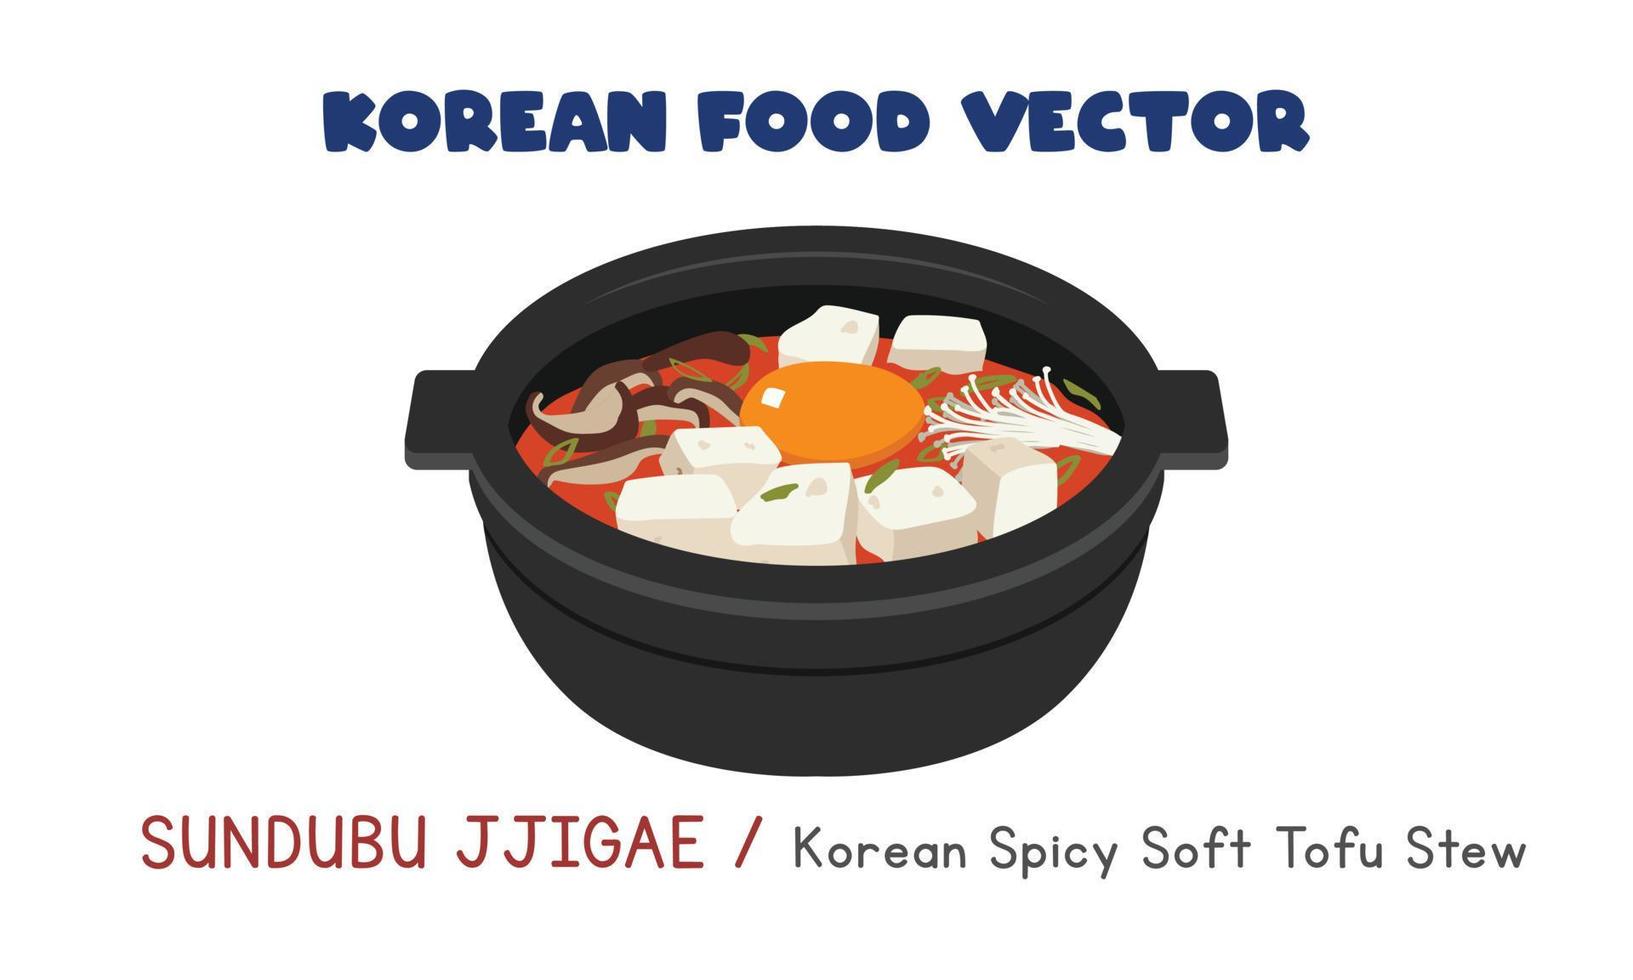 Korean Sundubu Jjigae - Korean spicy soft tofu stew flat vector design illustration, clipart cartoon style. Asian food. Korean cuisine. Korean food